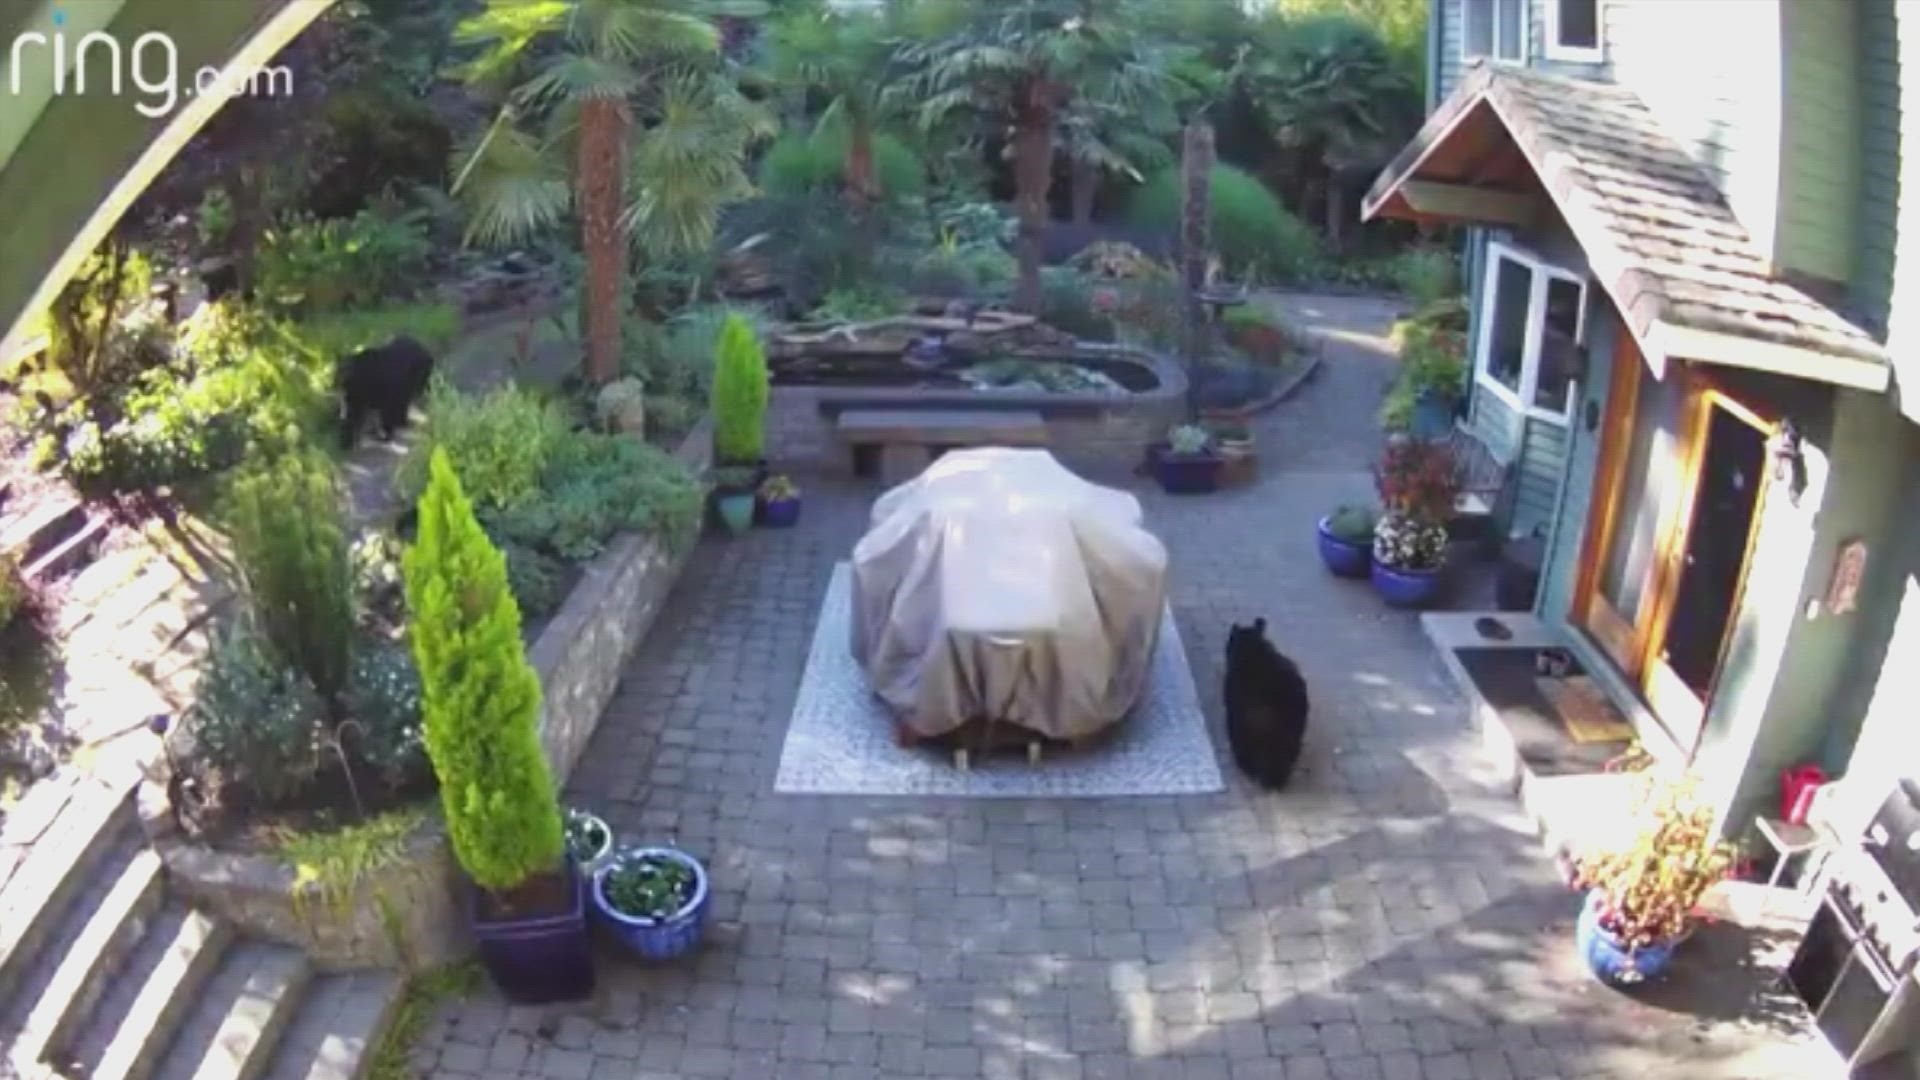 Three black bears were caught snooping around a Woodinville backyard Sunday.